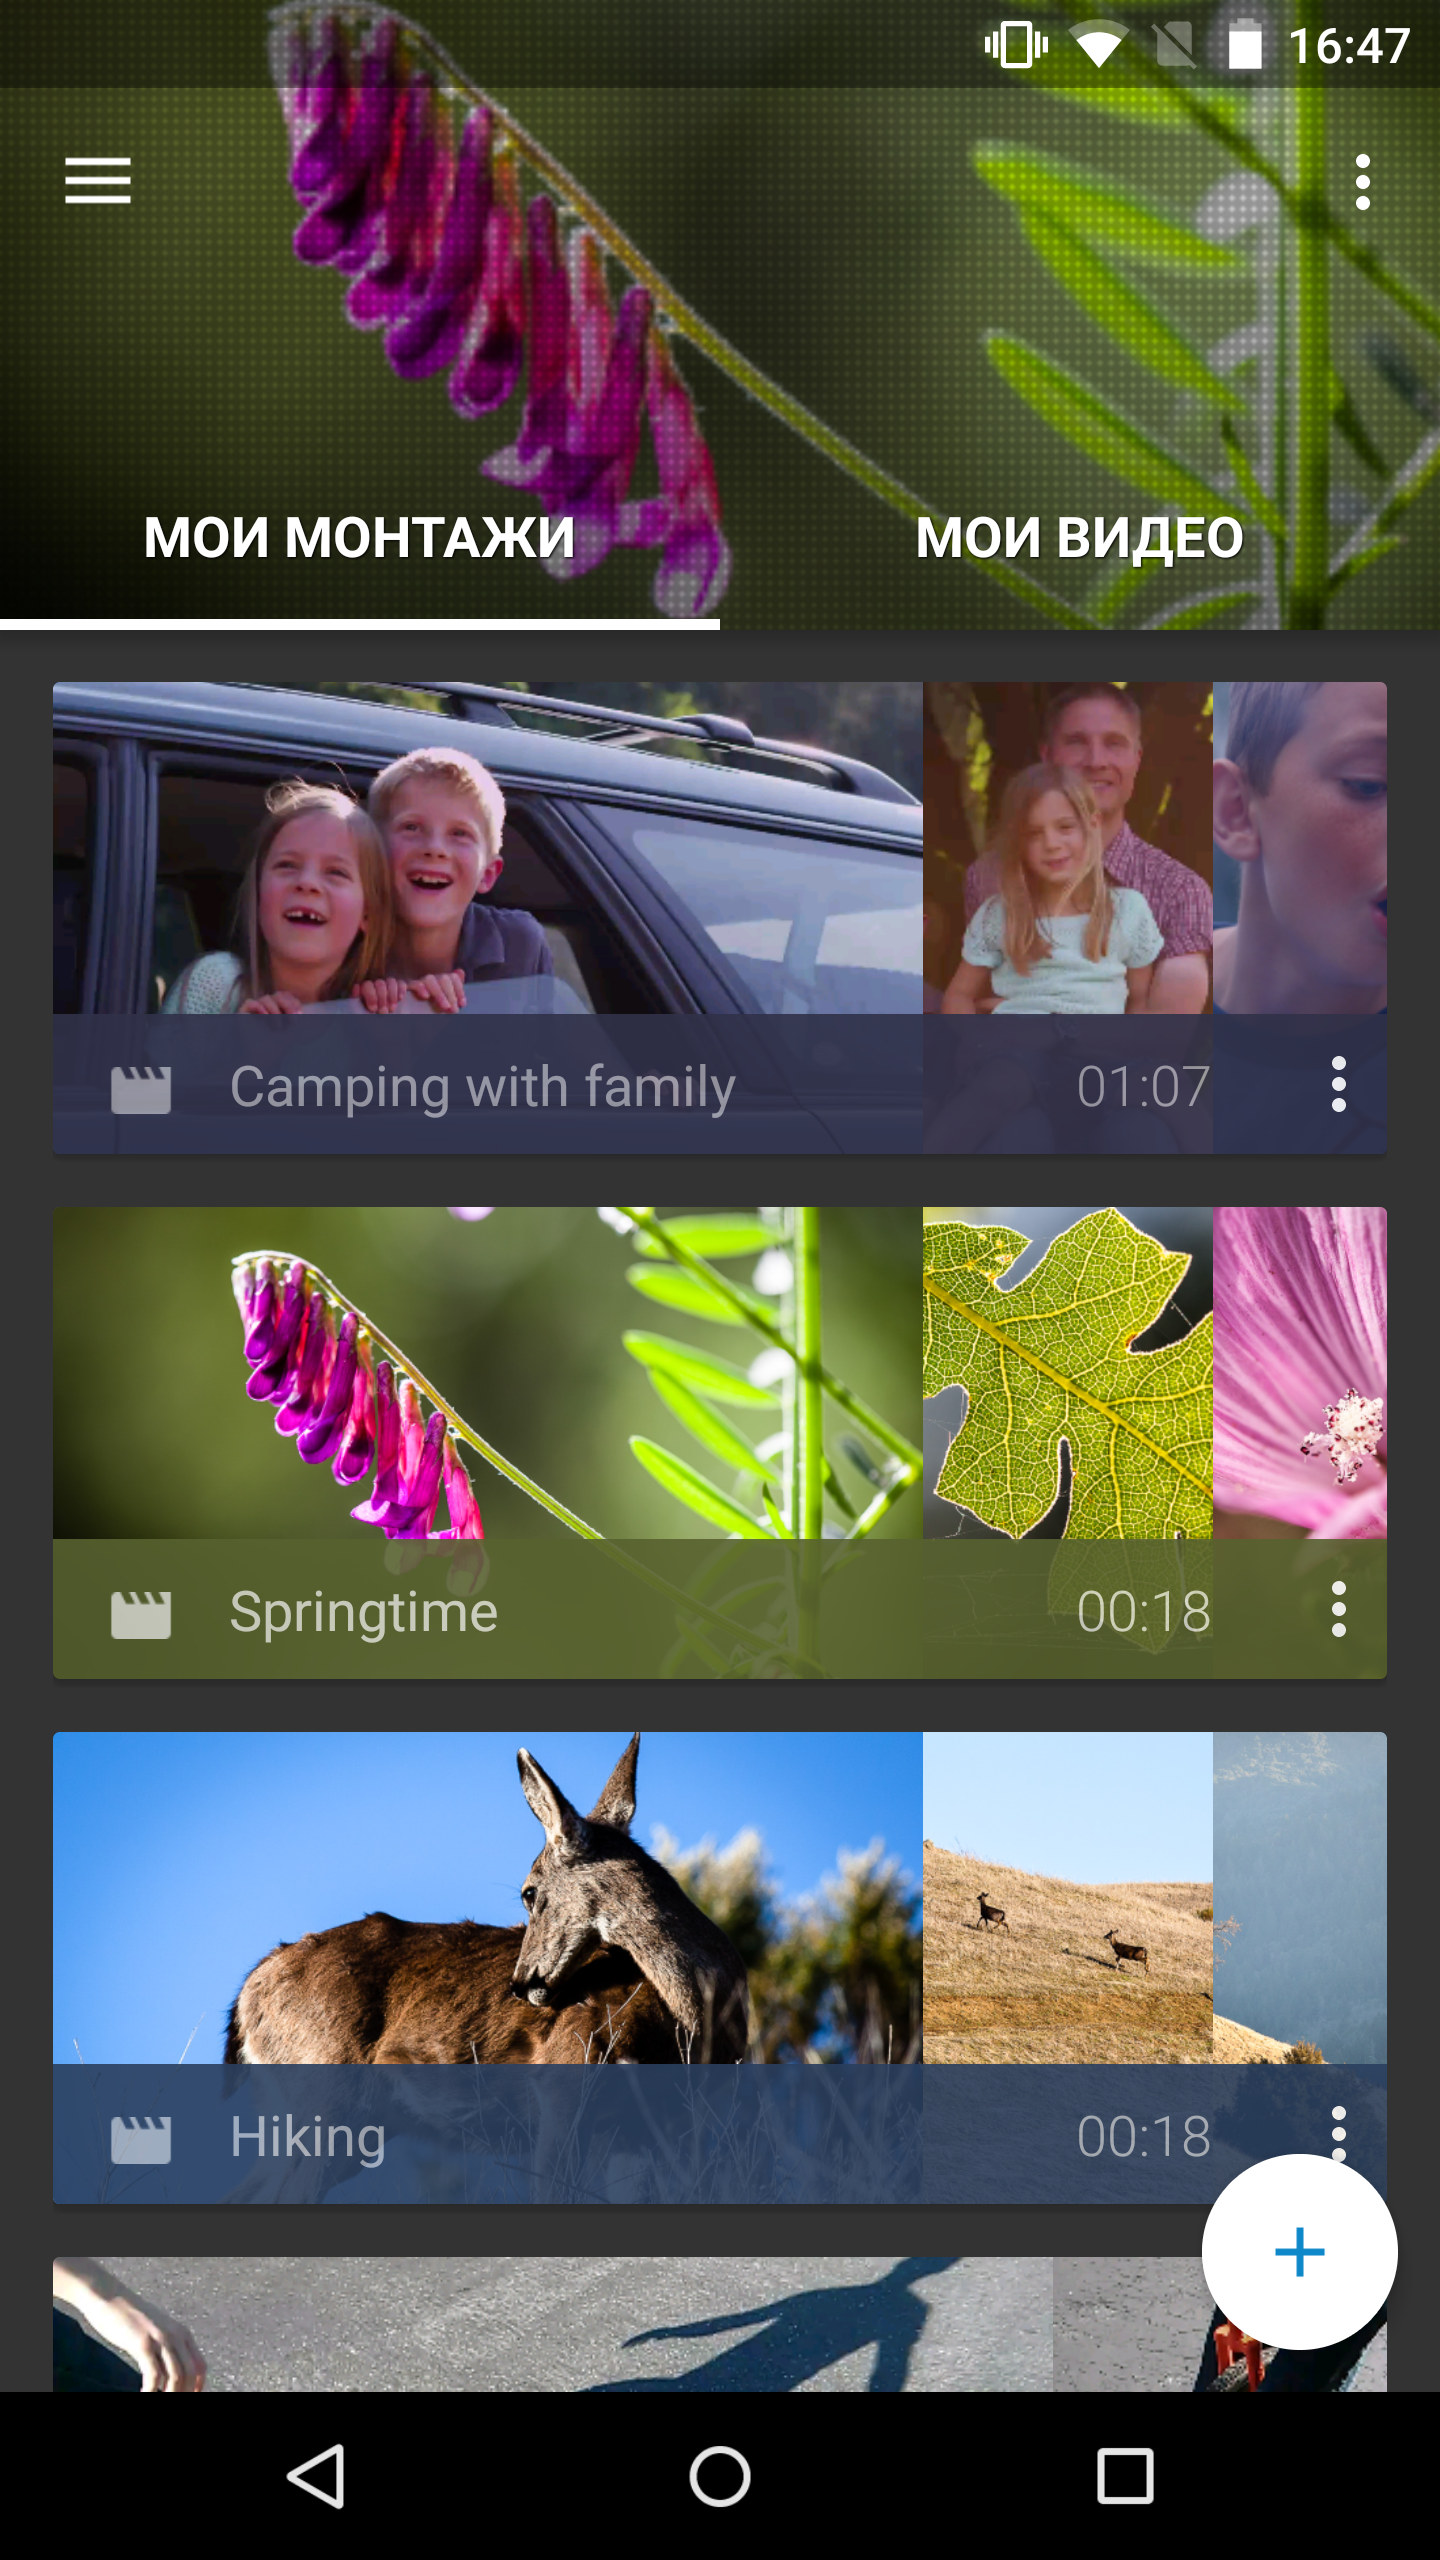 Android application Video Editor screenshort